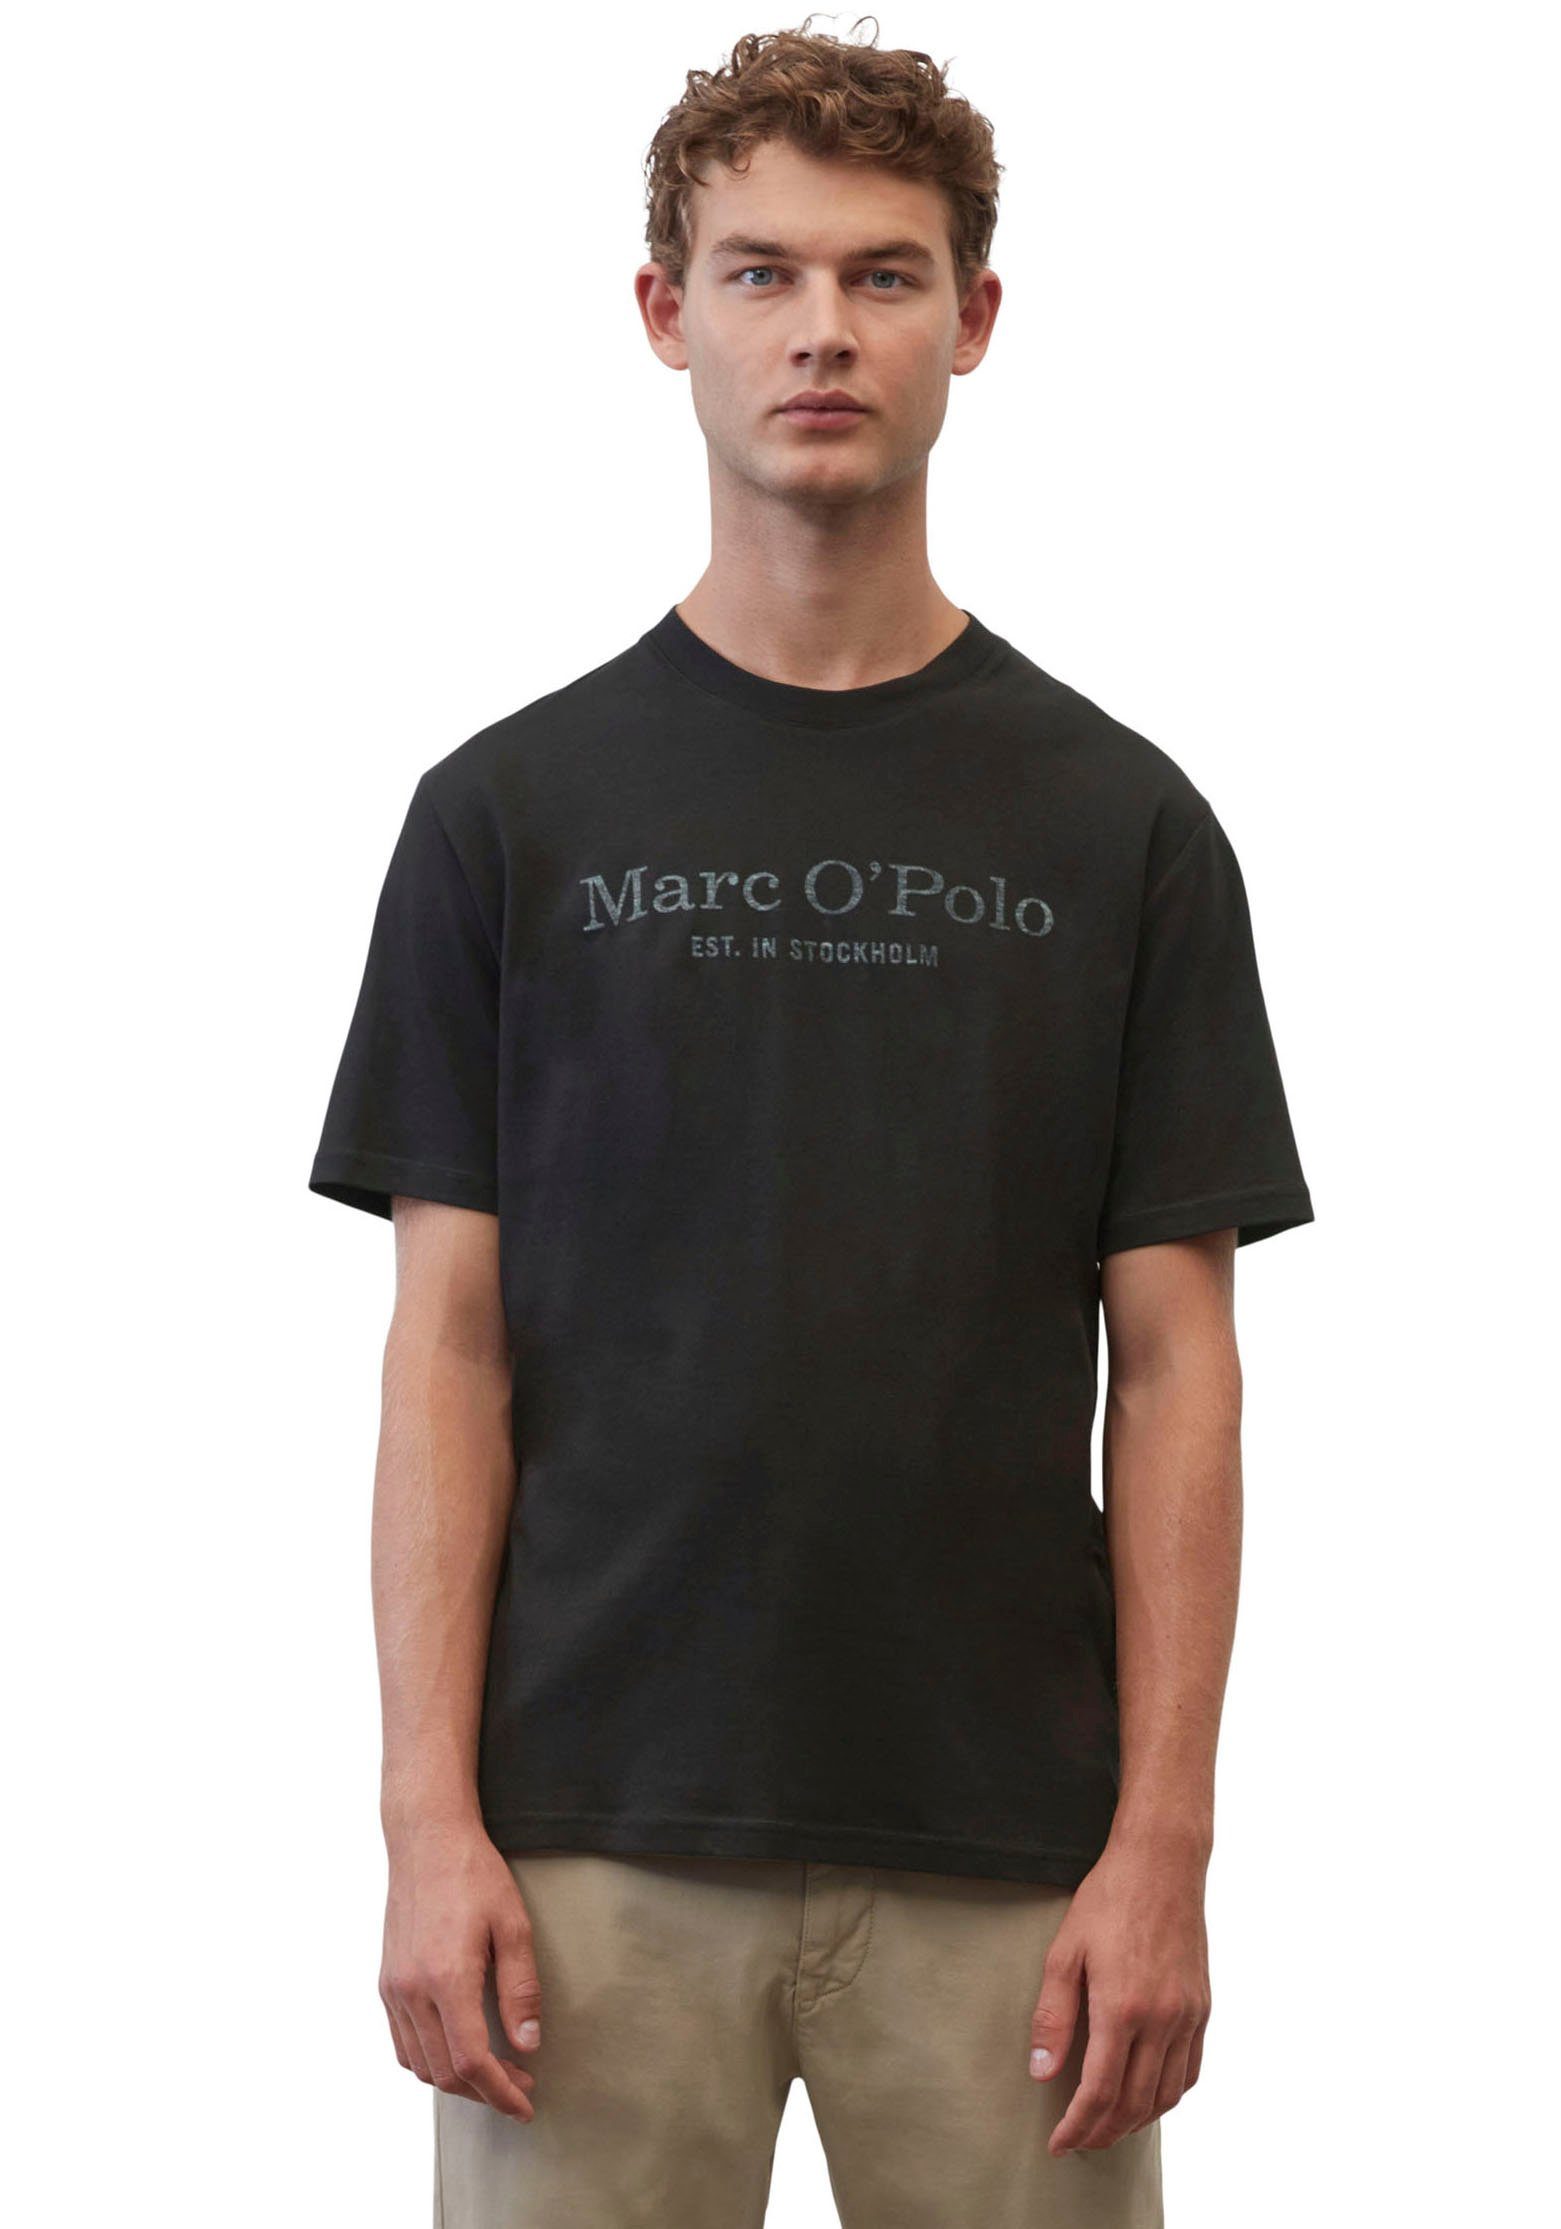 O'Polo schwarz Marc T-Shirt Logo-T-Shirt klassisches